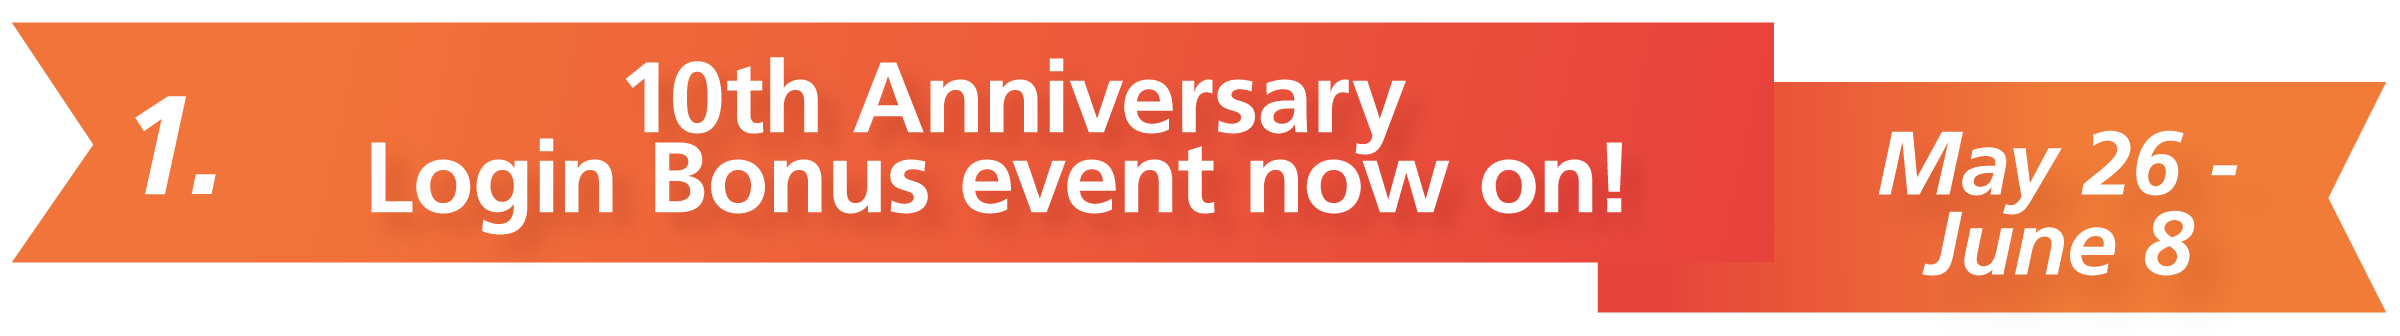 1. 10th Anniversary Login Bonus event now on! May 26 — June 8